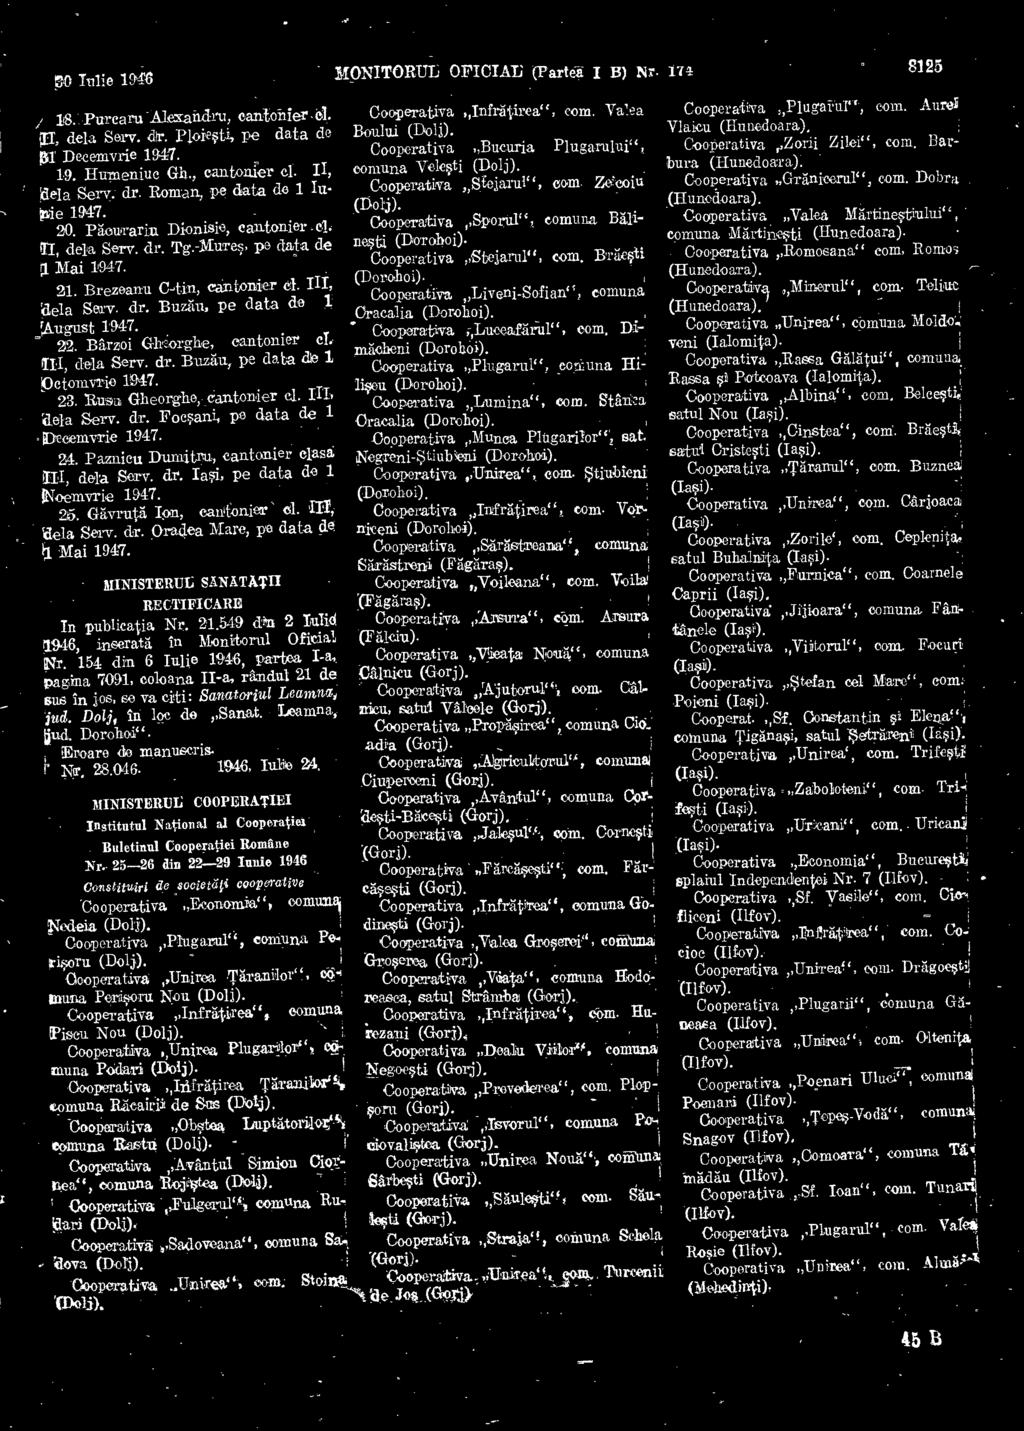 MINISTERUL SANATATII RECTIFICARE In publicatia Nr. 21.549 dit 2 Raid 1946, ir serafa' In Monitoral Oficiai r.